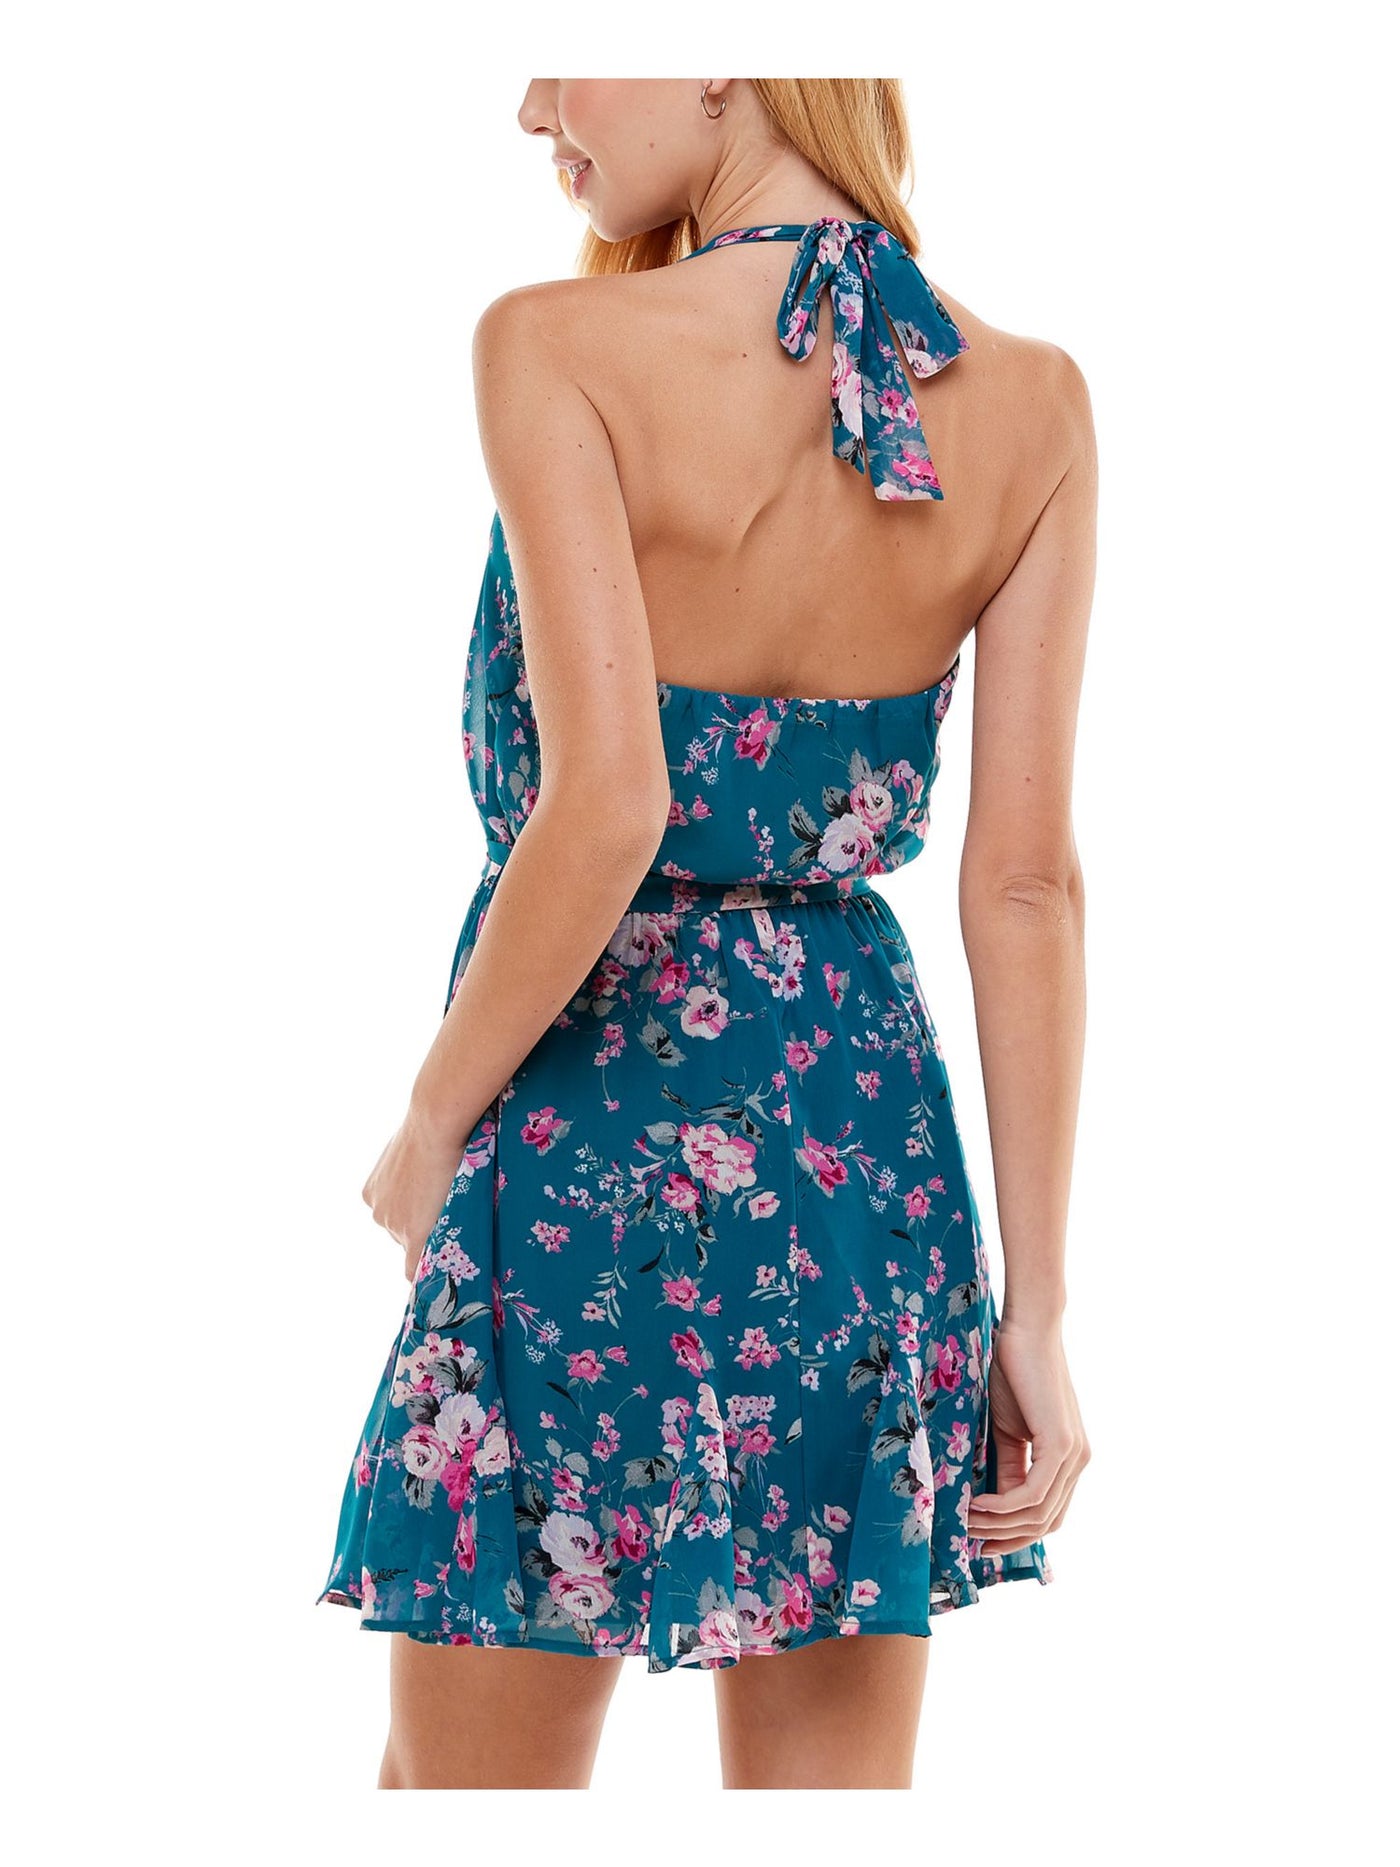 CITY STUDIO Womens Tie Floral Sleeveless Scoop Neck Mini Party Fit + Flare Dress Juniors